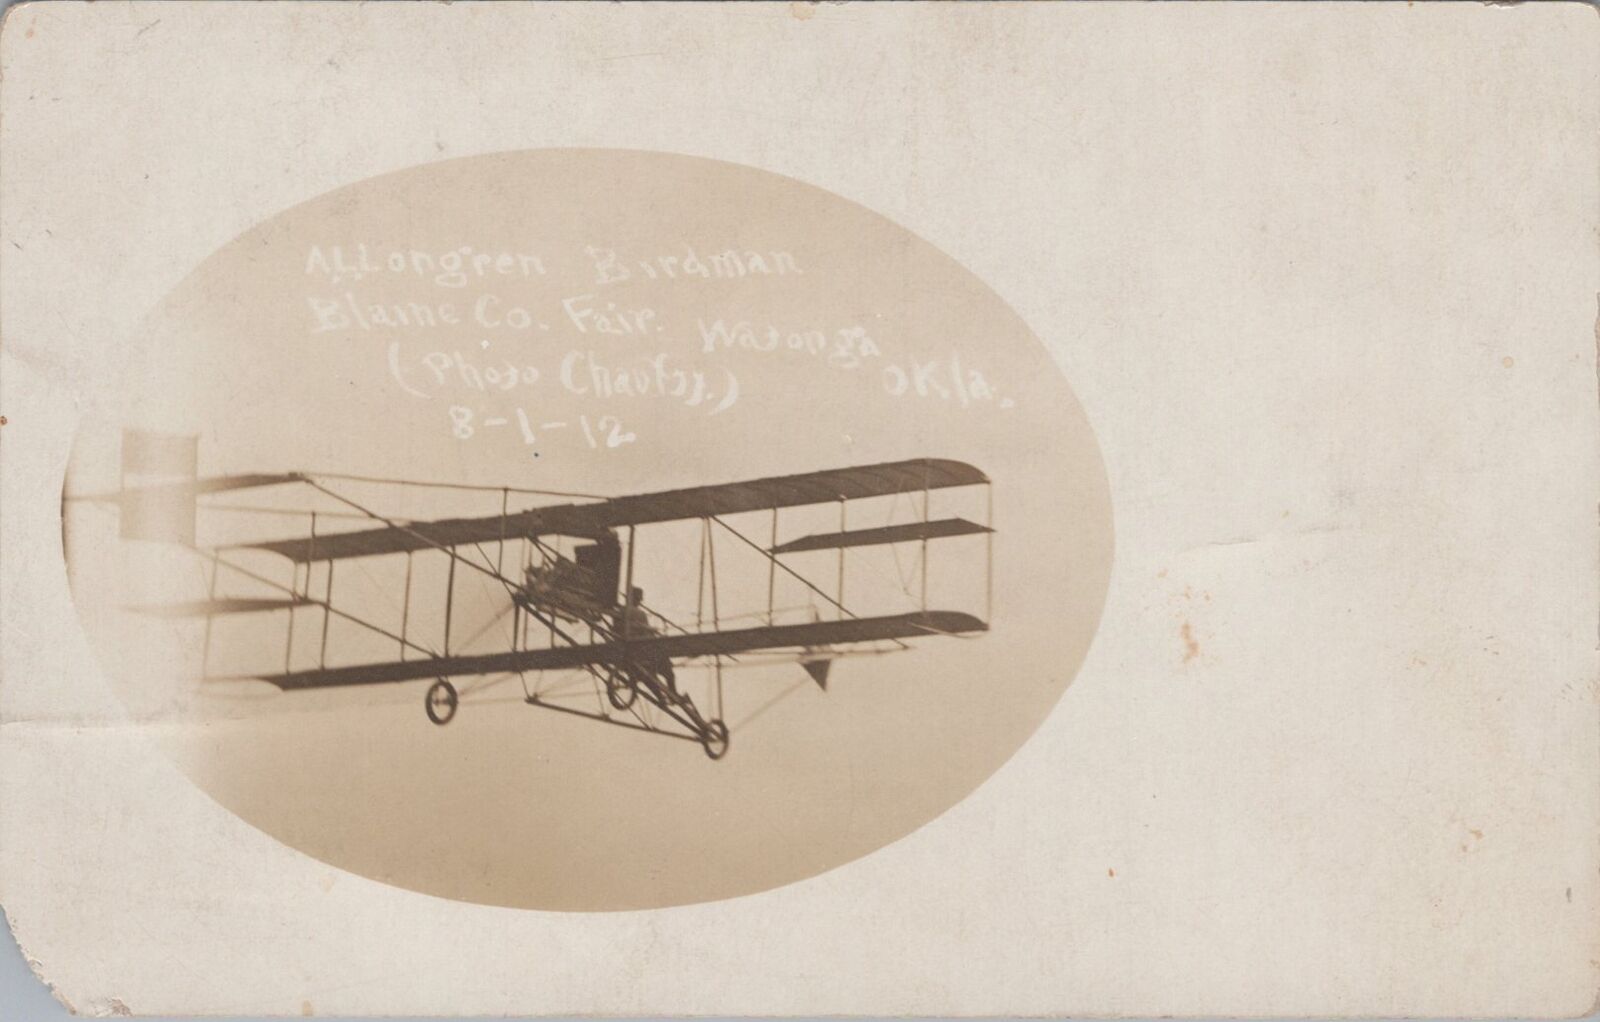 Allongren Birdman,Blaine Co.Fair,Watonga,OK Aviation Plane RPPC c1920s Postcard